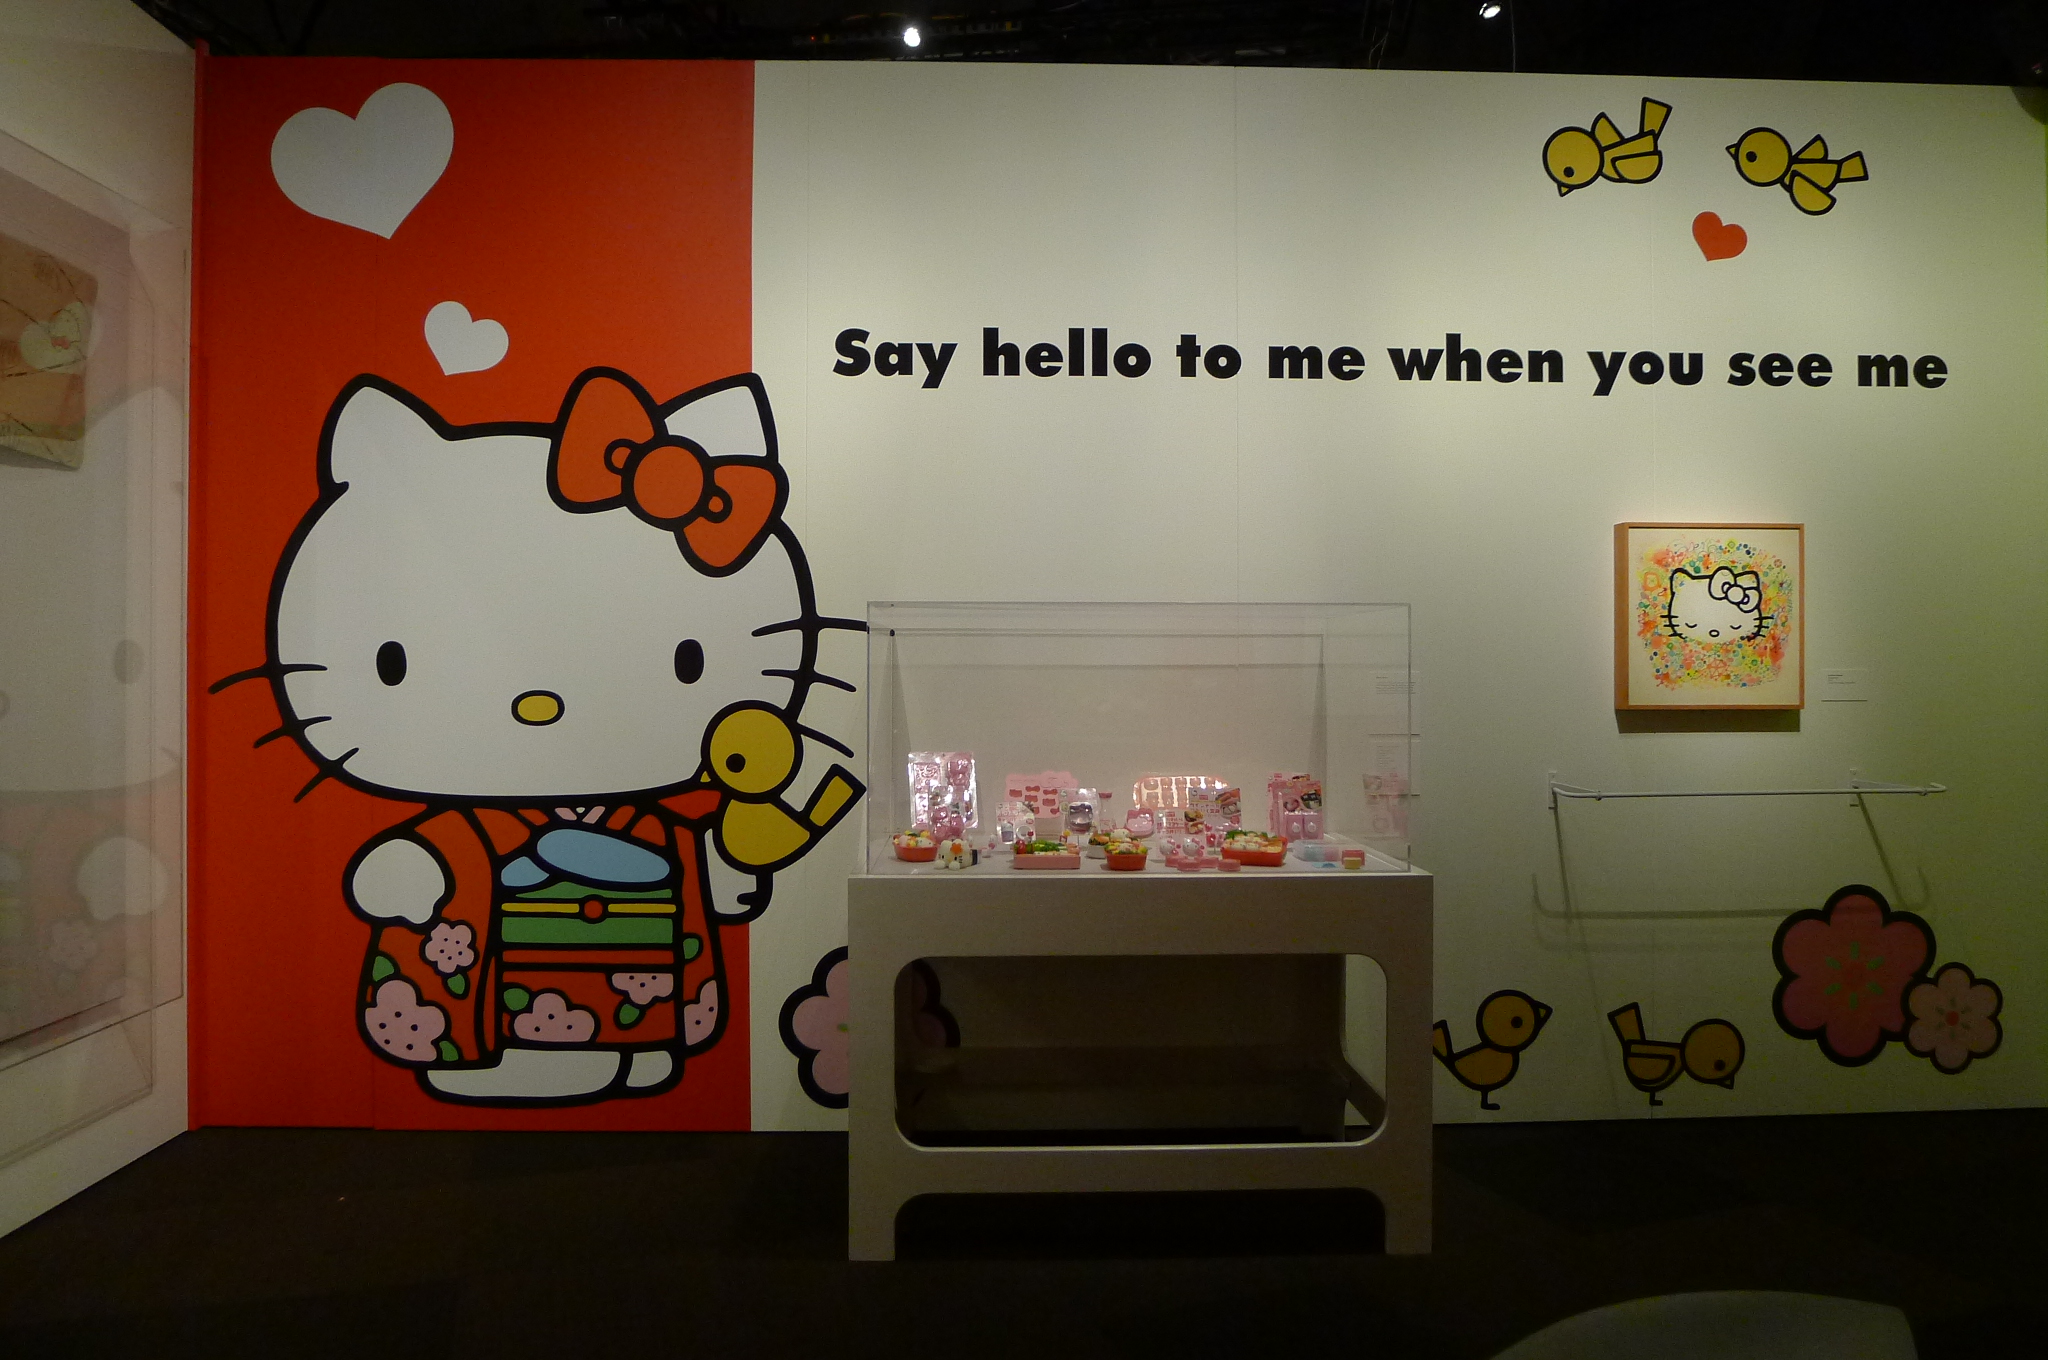 Hello Kitty Museum Exhibit in Seattle